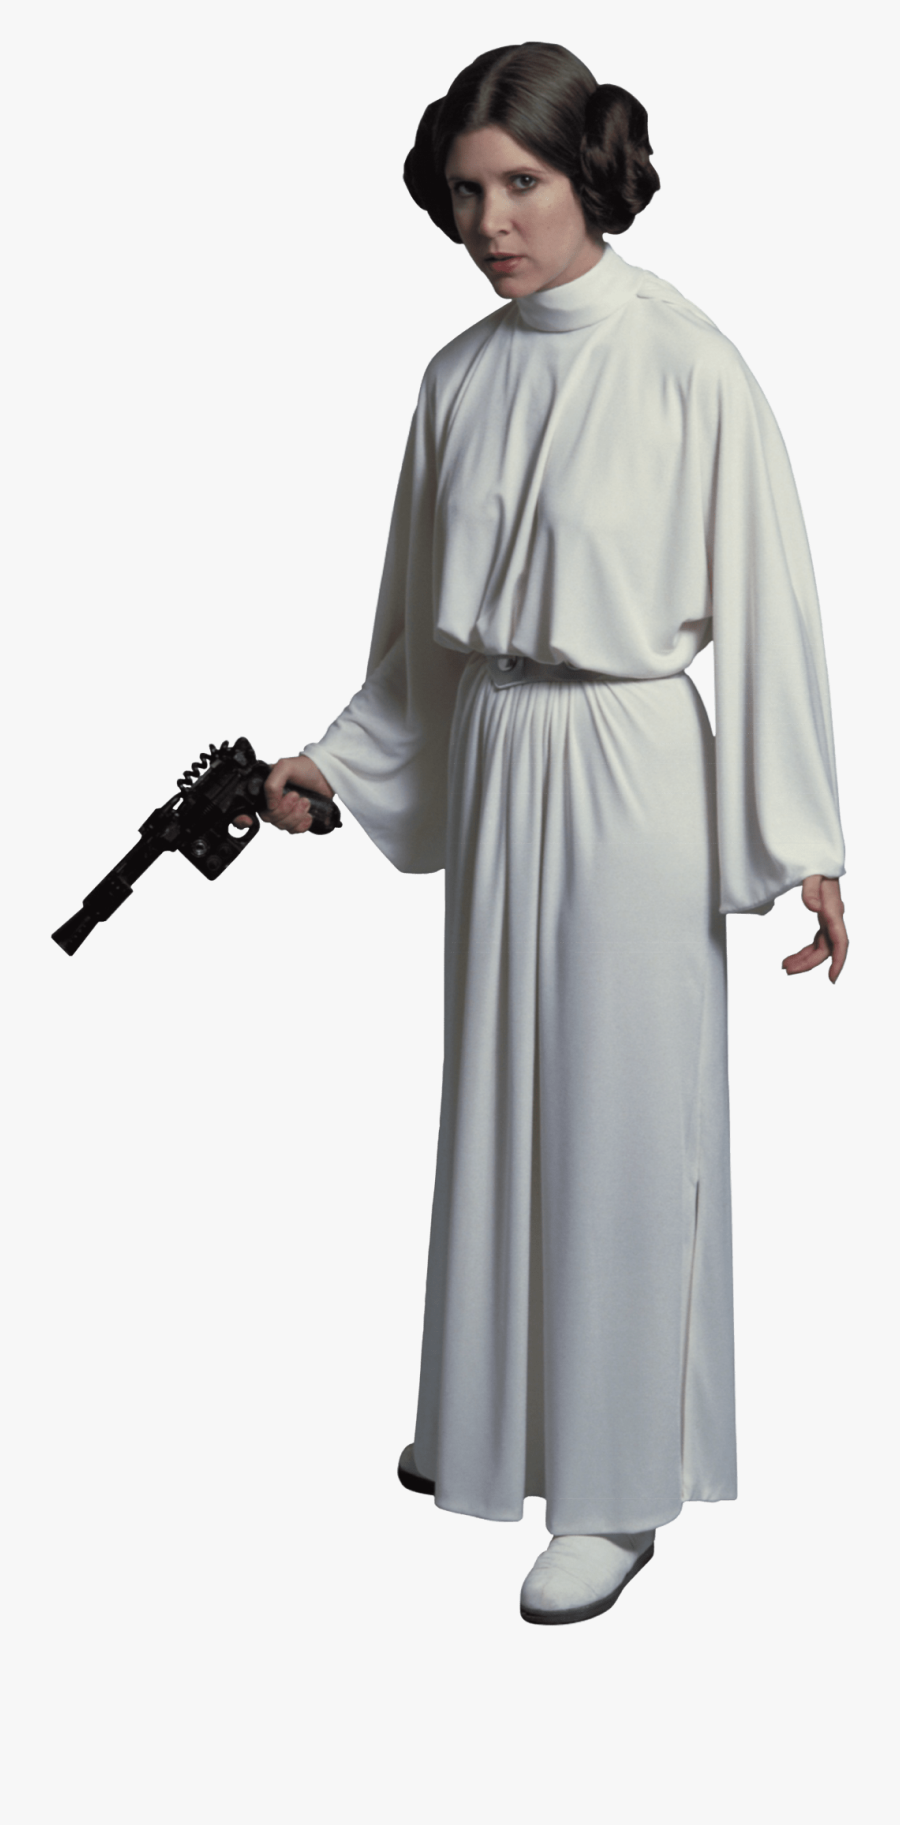 Princess Leia Png - Star Wars Leia Png, Transparent Clipart